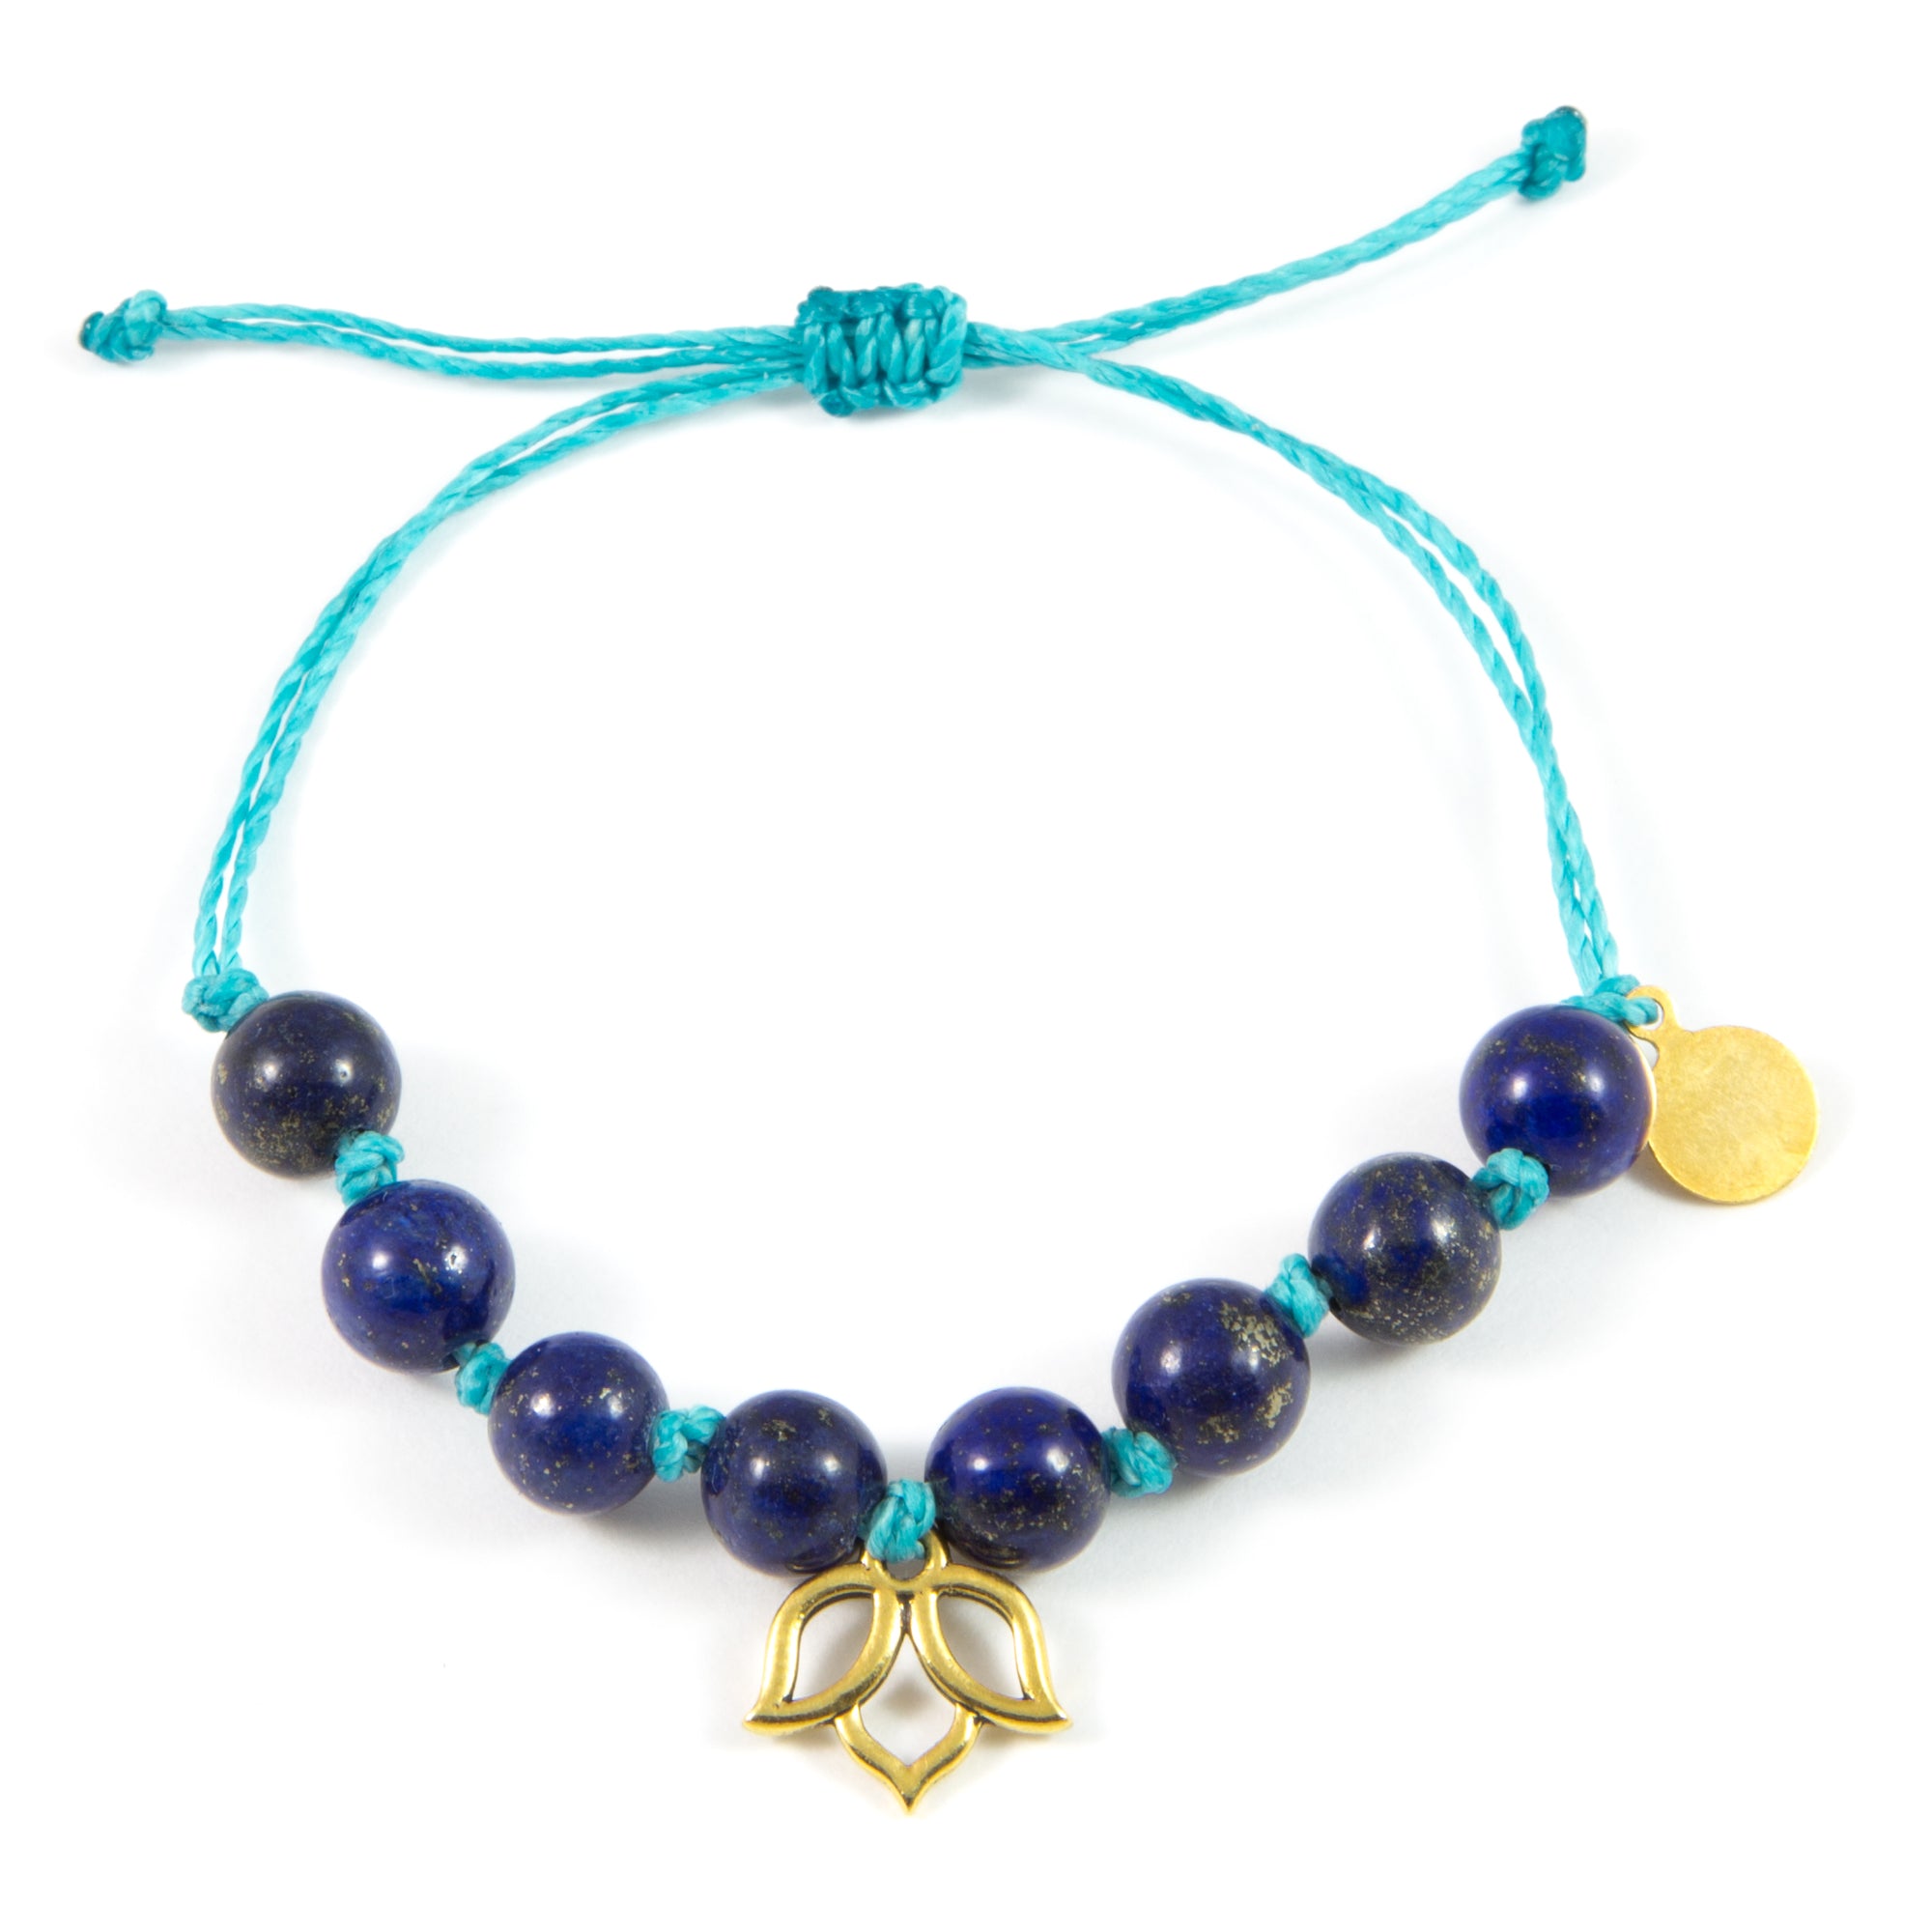 Teal & Blue Lapis Lotus Flower Bracelet